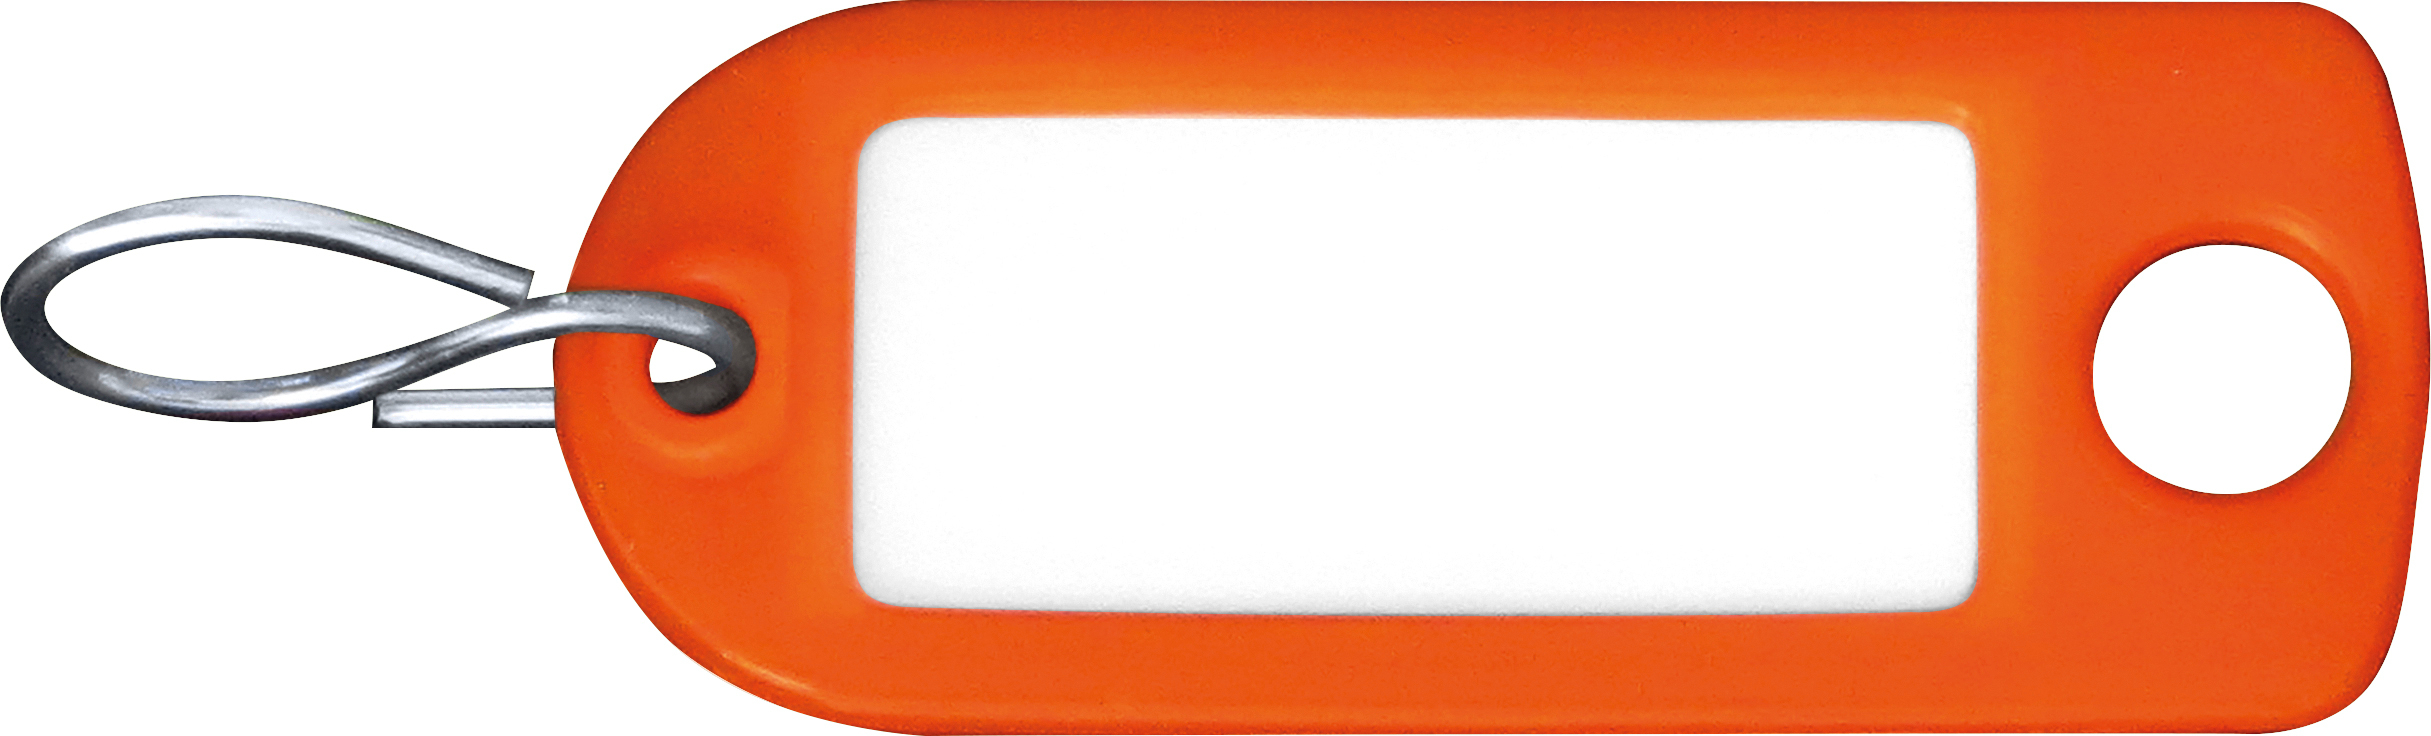 RIEFFEL SWITZERLAND Porte-clé 8034 FS ORANGE orange 100 pcs.